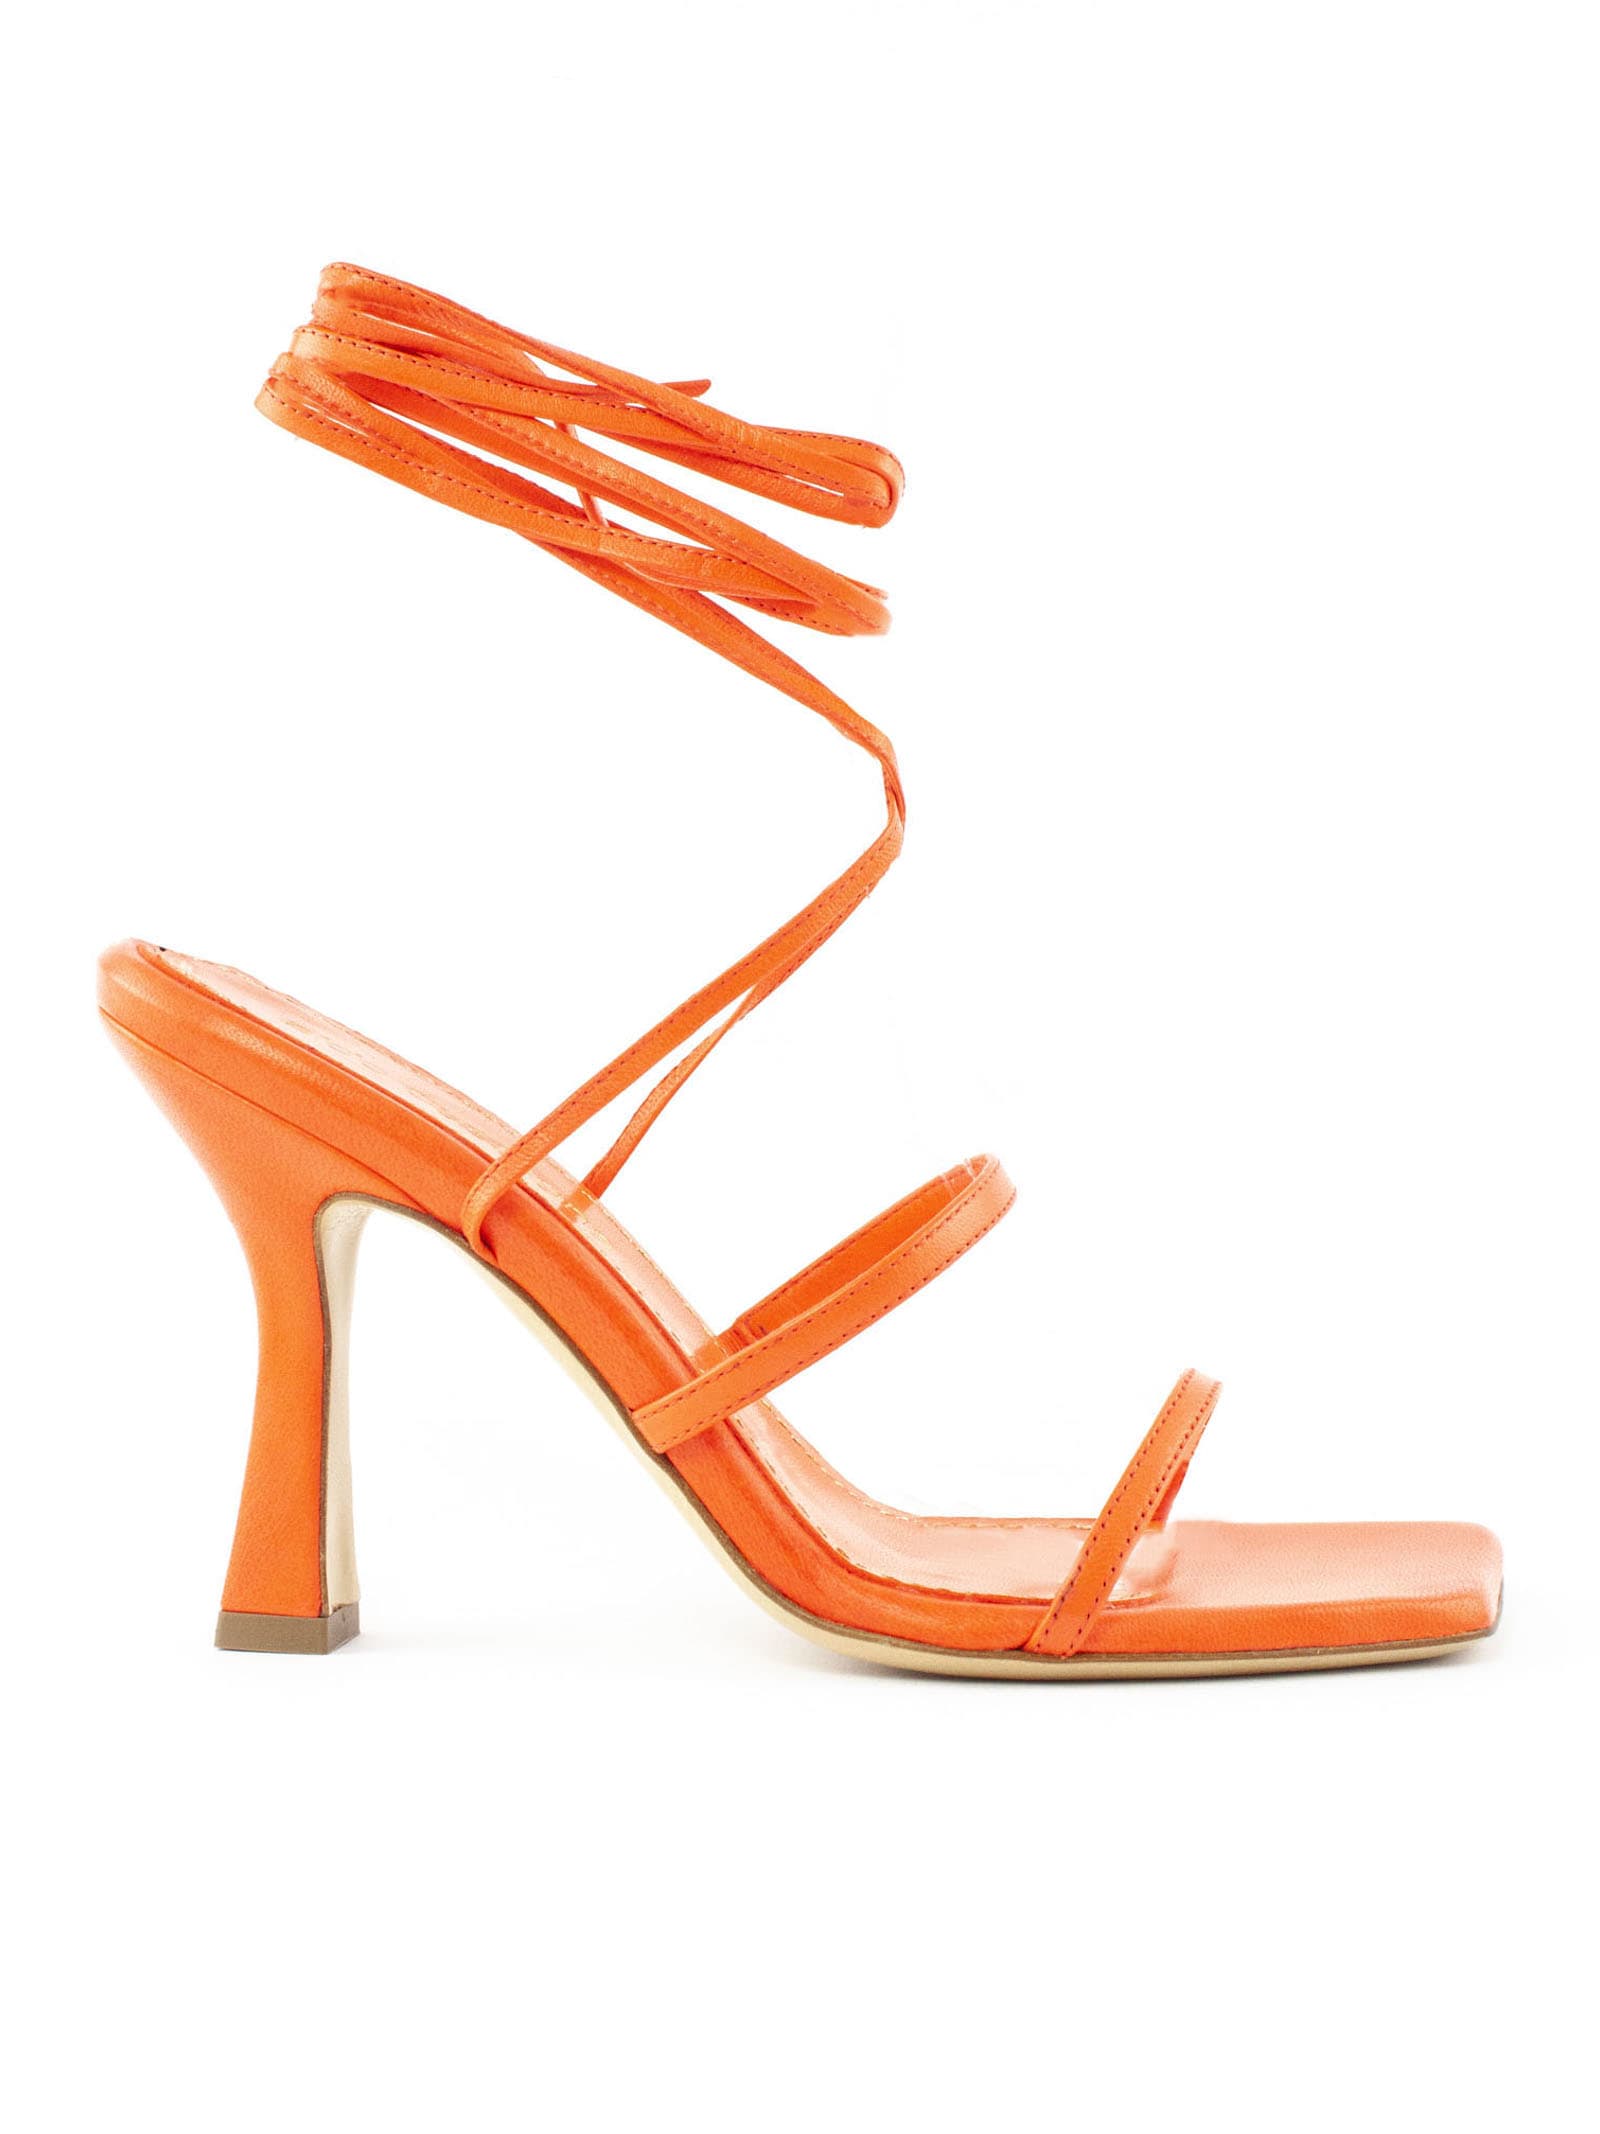 Aldo Castagna Lisa Orange Leather Sandals